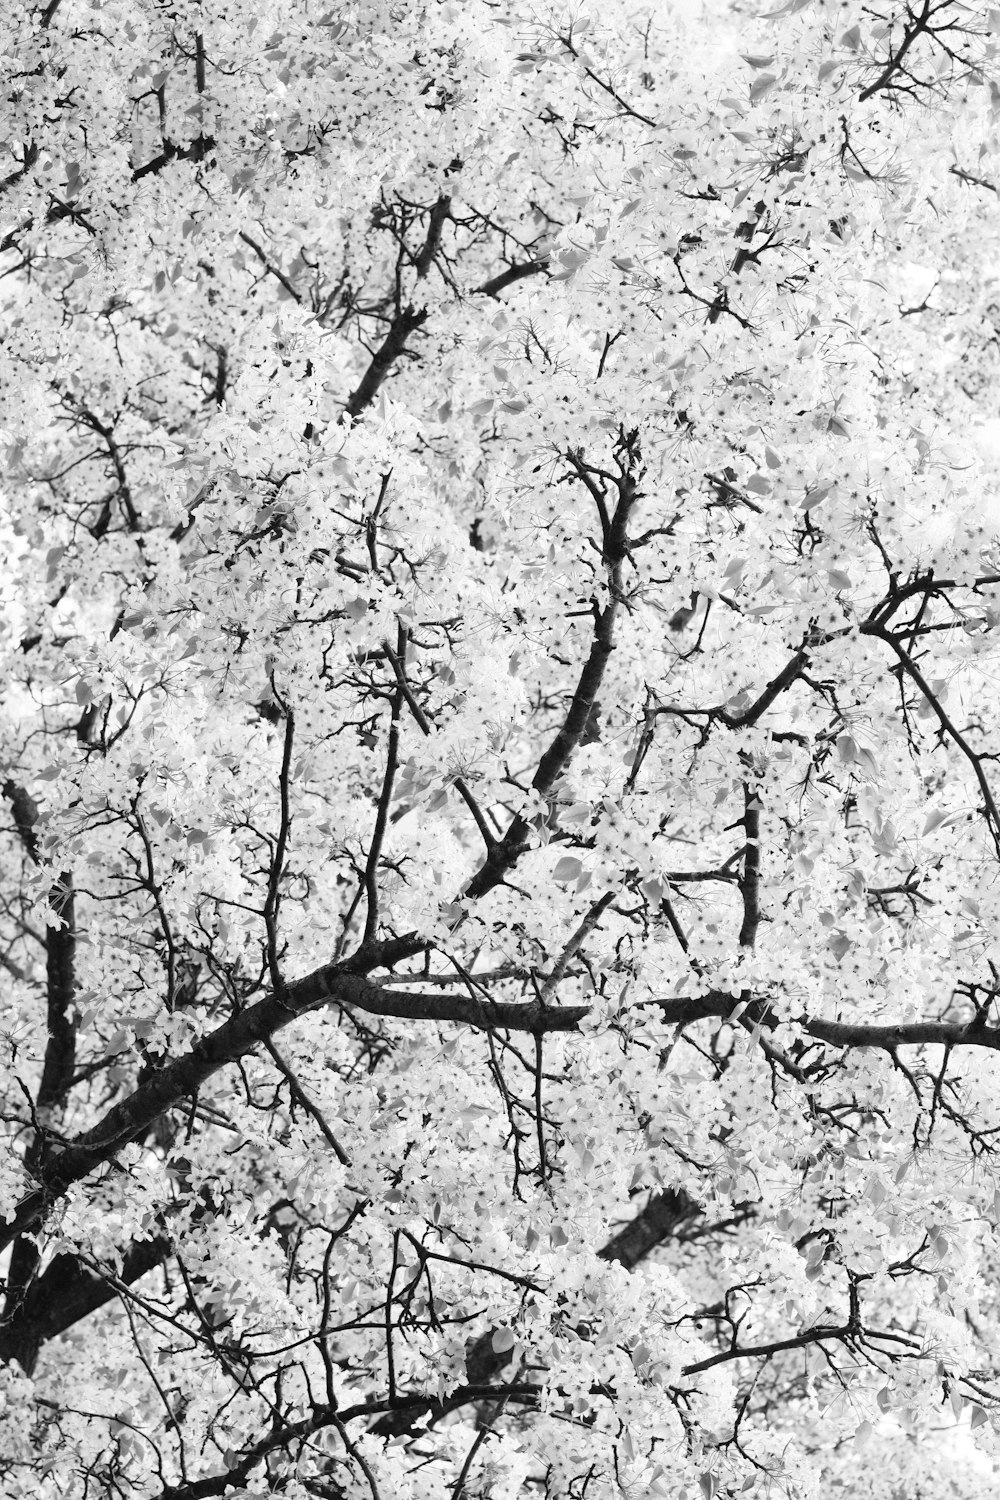 white cherry blossom tree during daytime